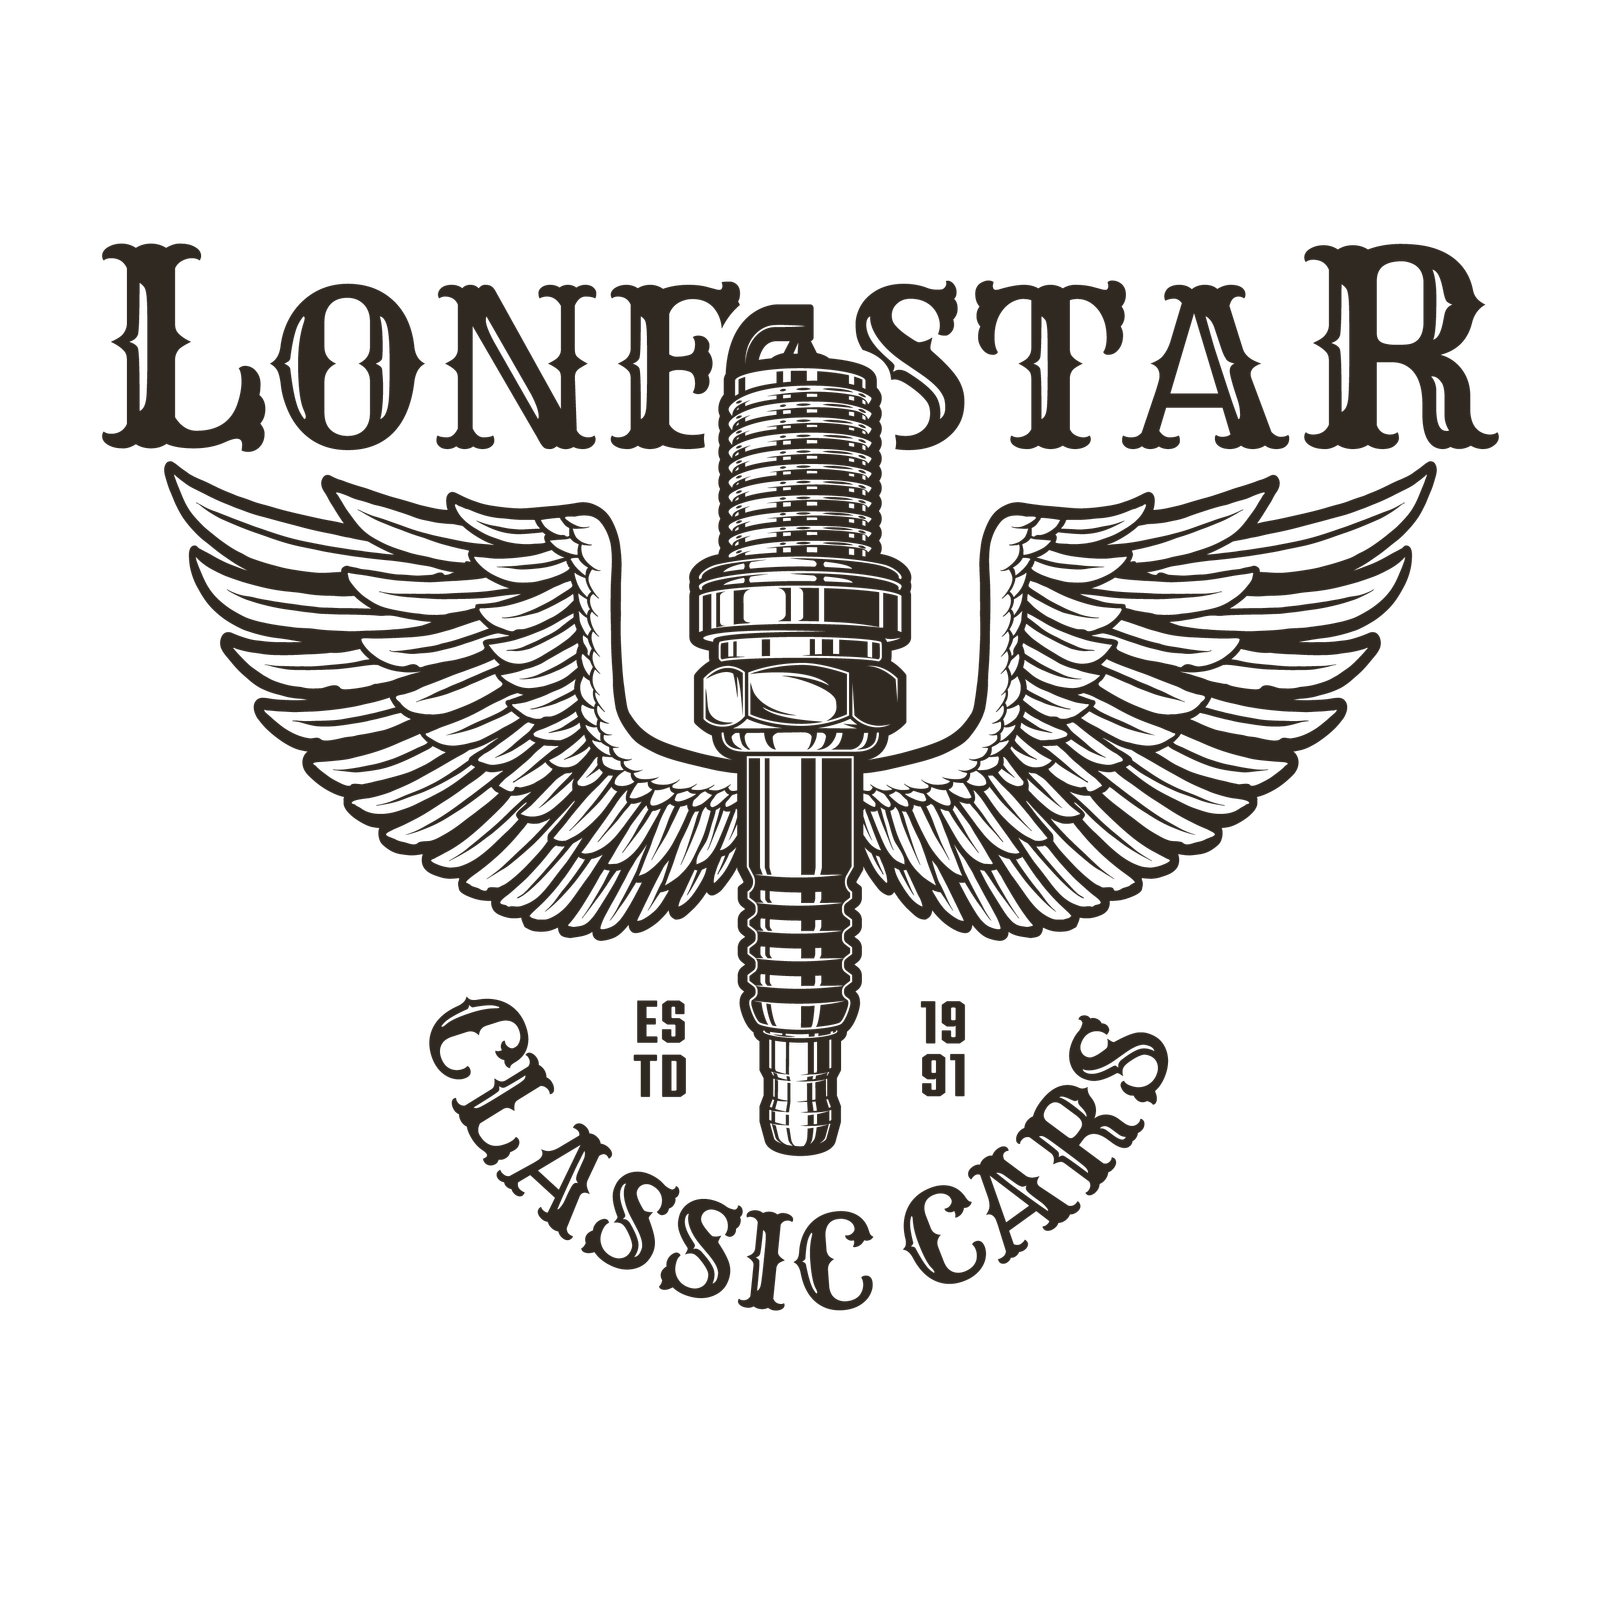 Lone Star Classic Cars